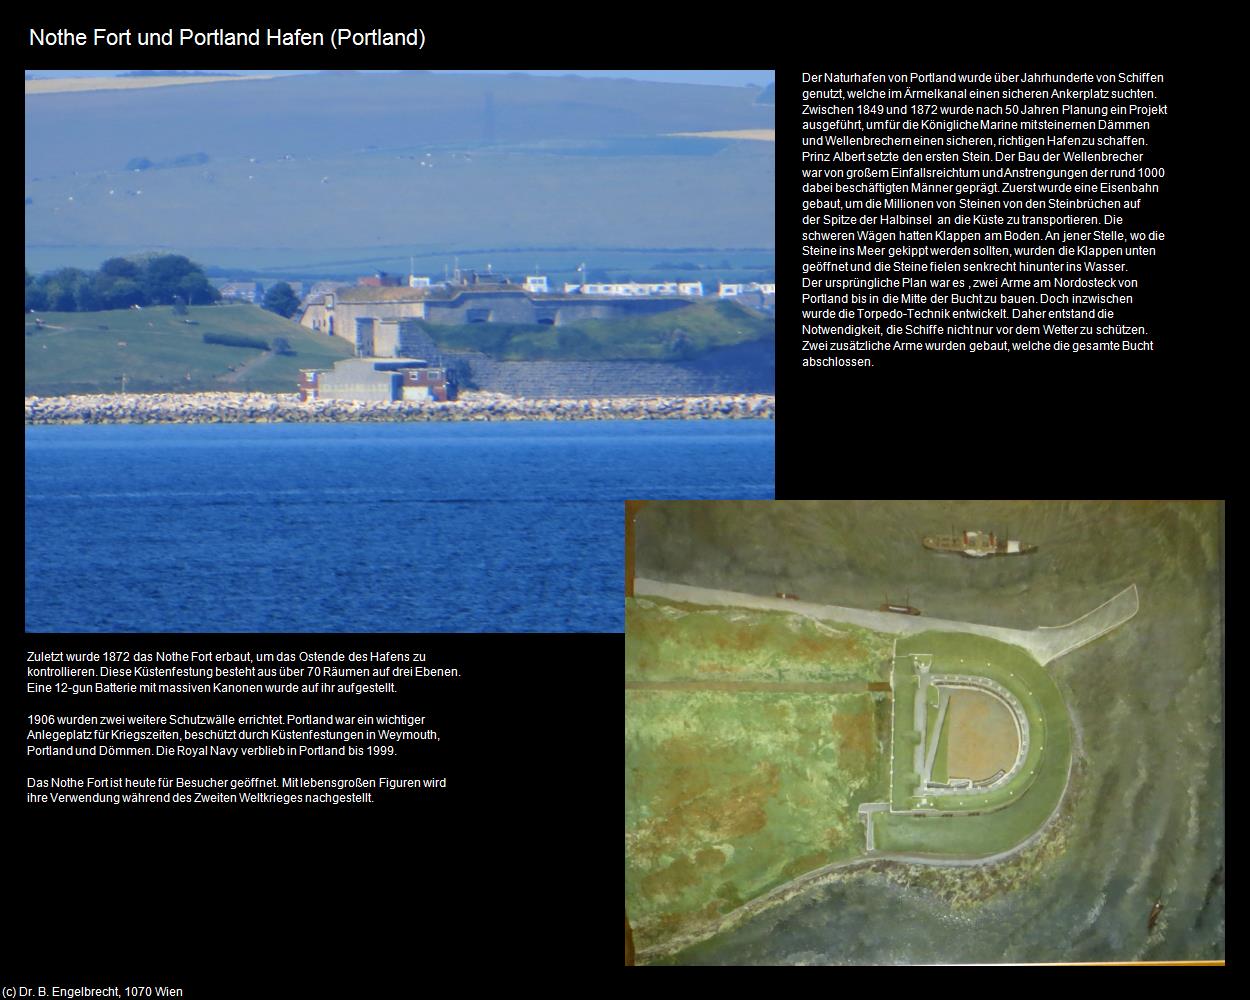 Nothe Fort und Portland Hafen  (Portland, England) in Kulturatlas-ENGLAND und WALES